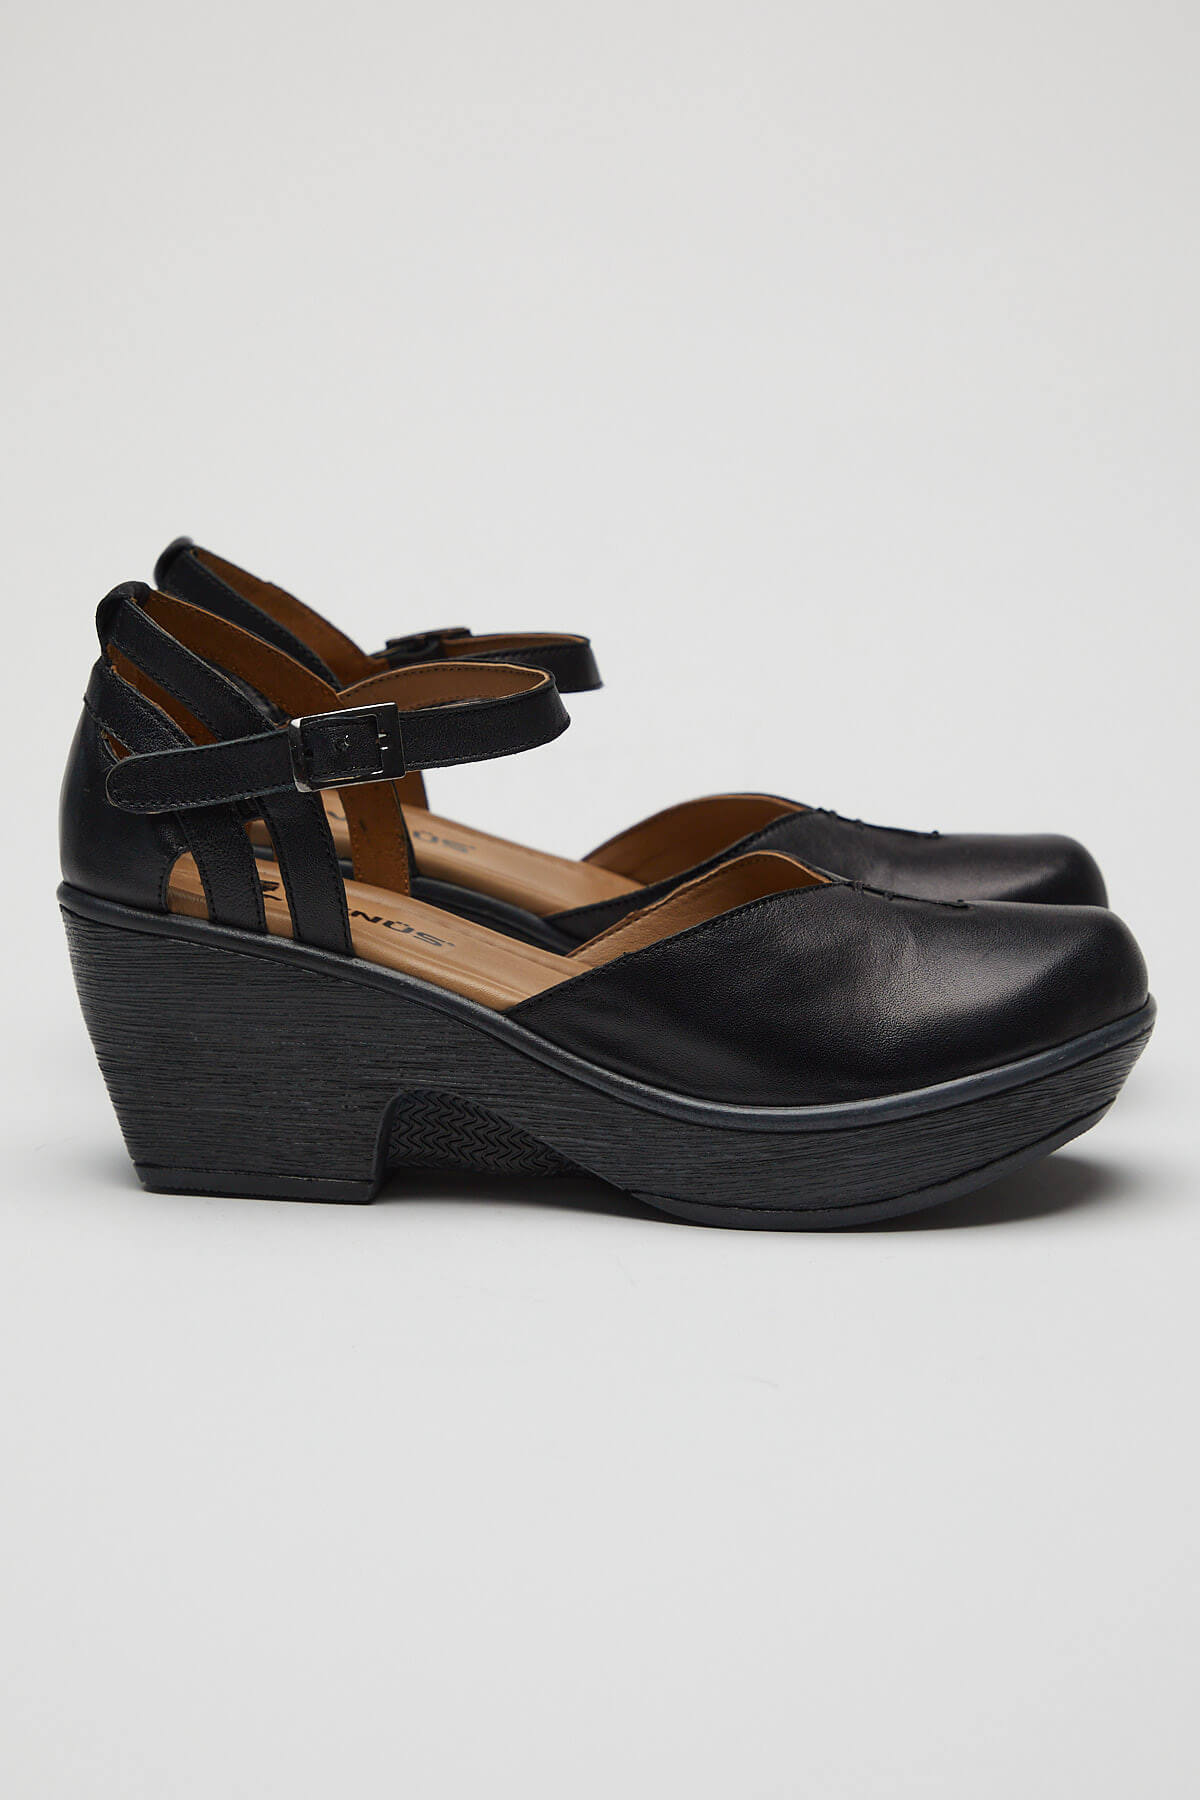 Kadın Apartman Topuk Deri Ayakkabı Siyah 1912502